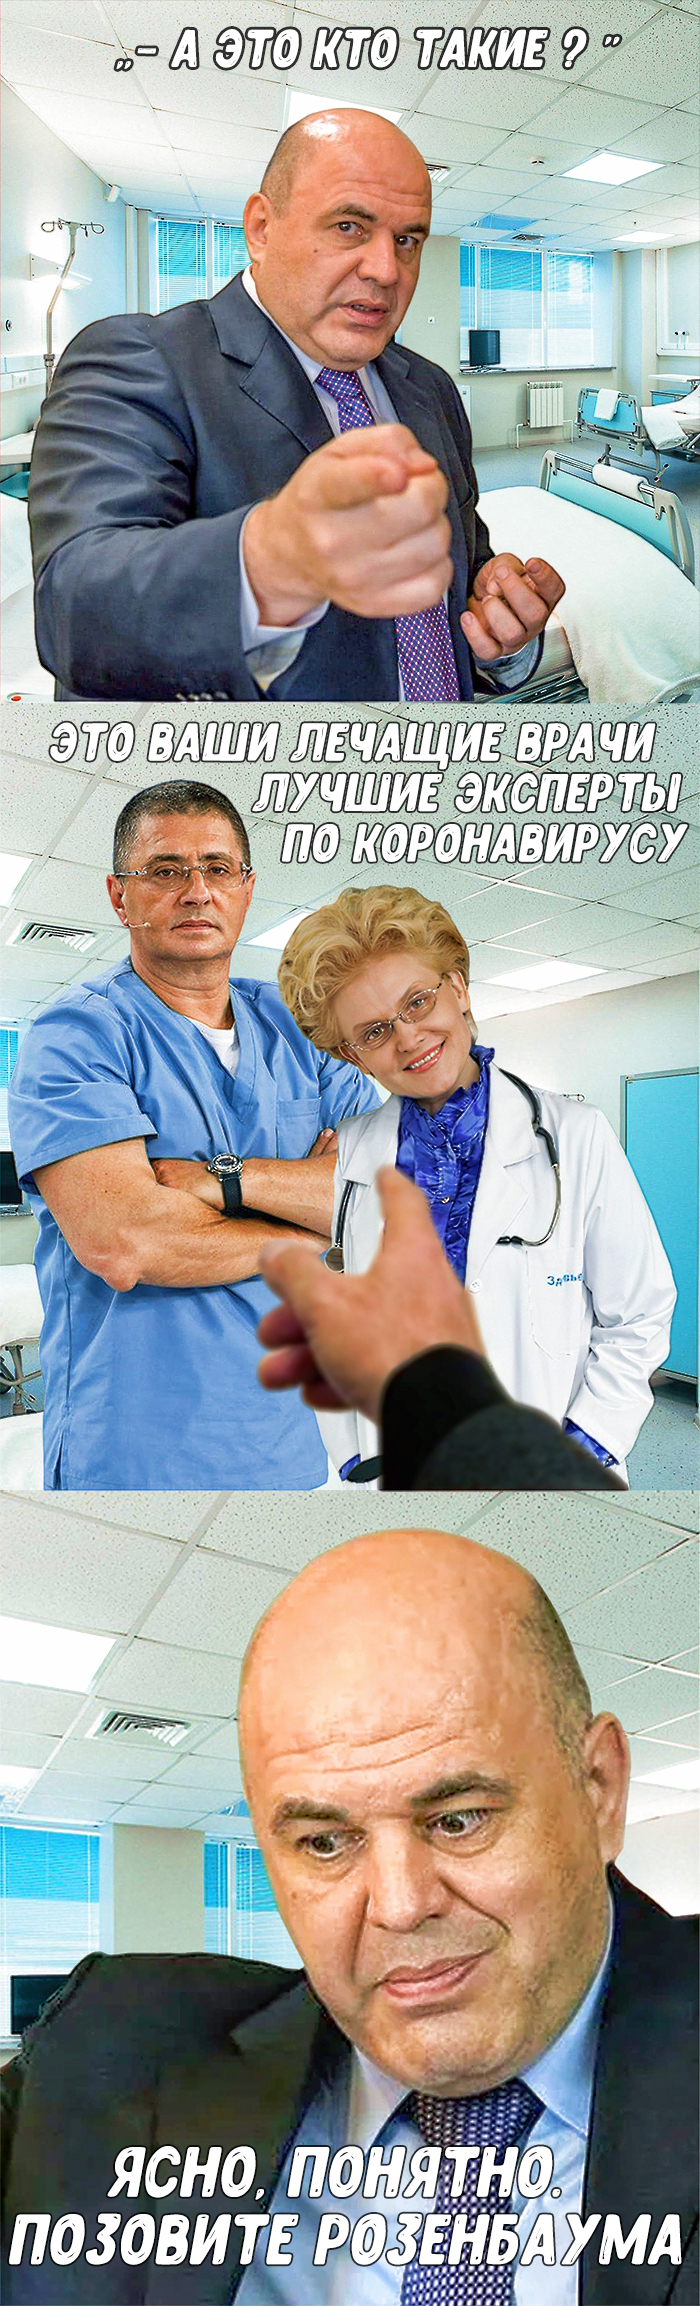 Hospital case - Doctors, Malysheva, Mikhail Mishustin, Coronavirus, Butchers, Picture with text, Longpost